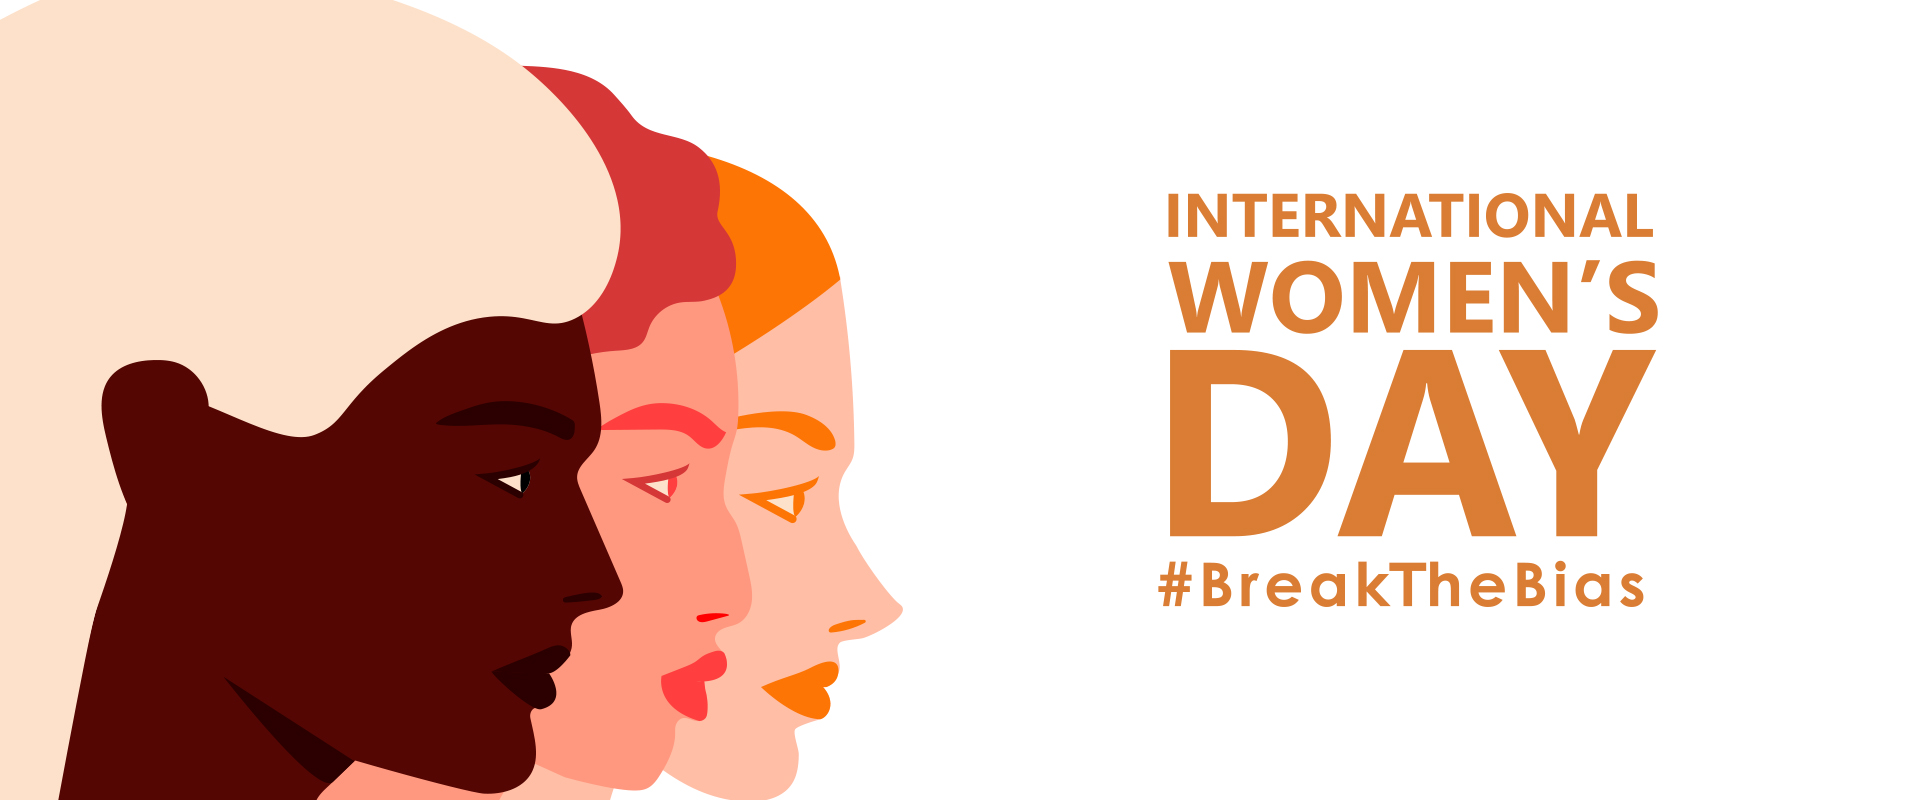 3 Ways for Employers to #BreakTheBias for International Women’s Day